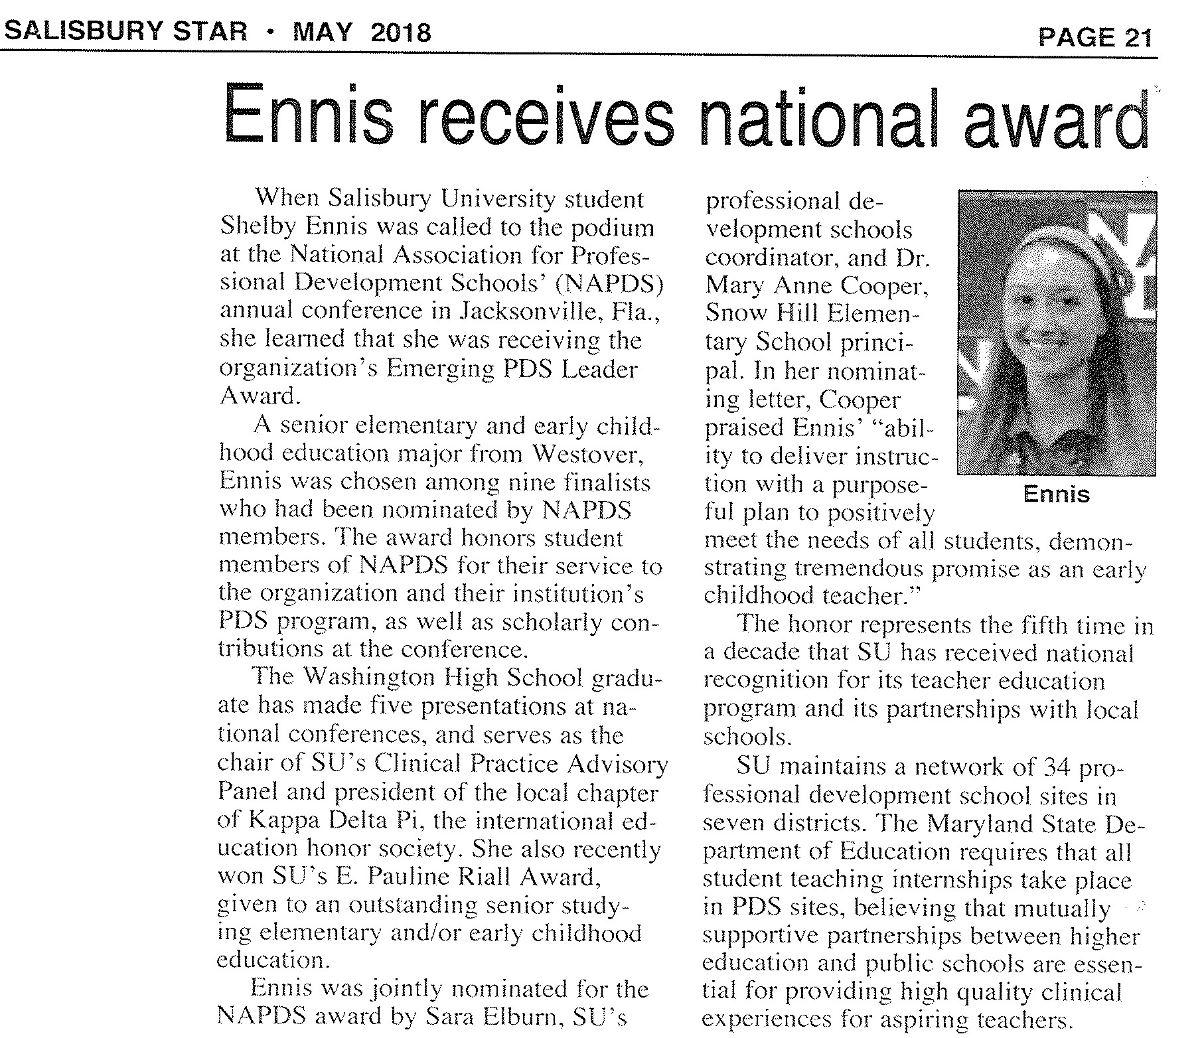 Ennis receives national award - newspaper clip